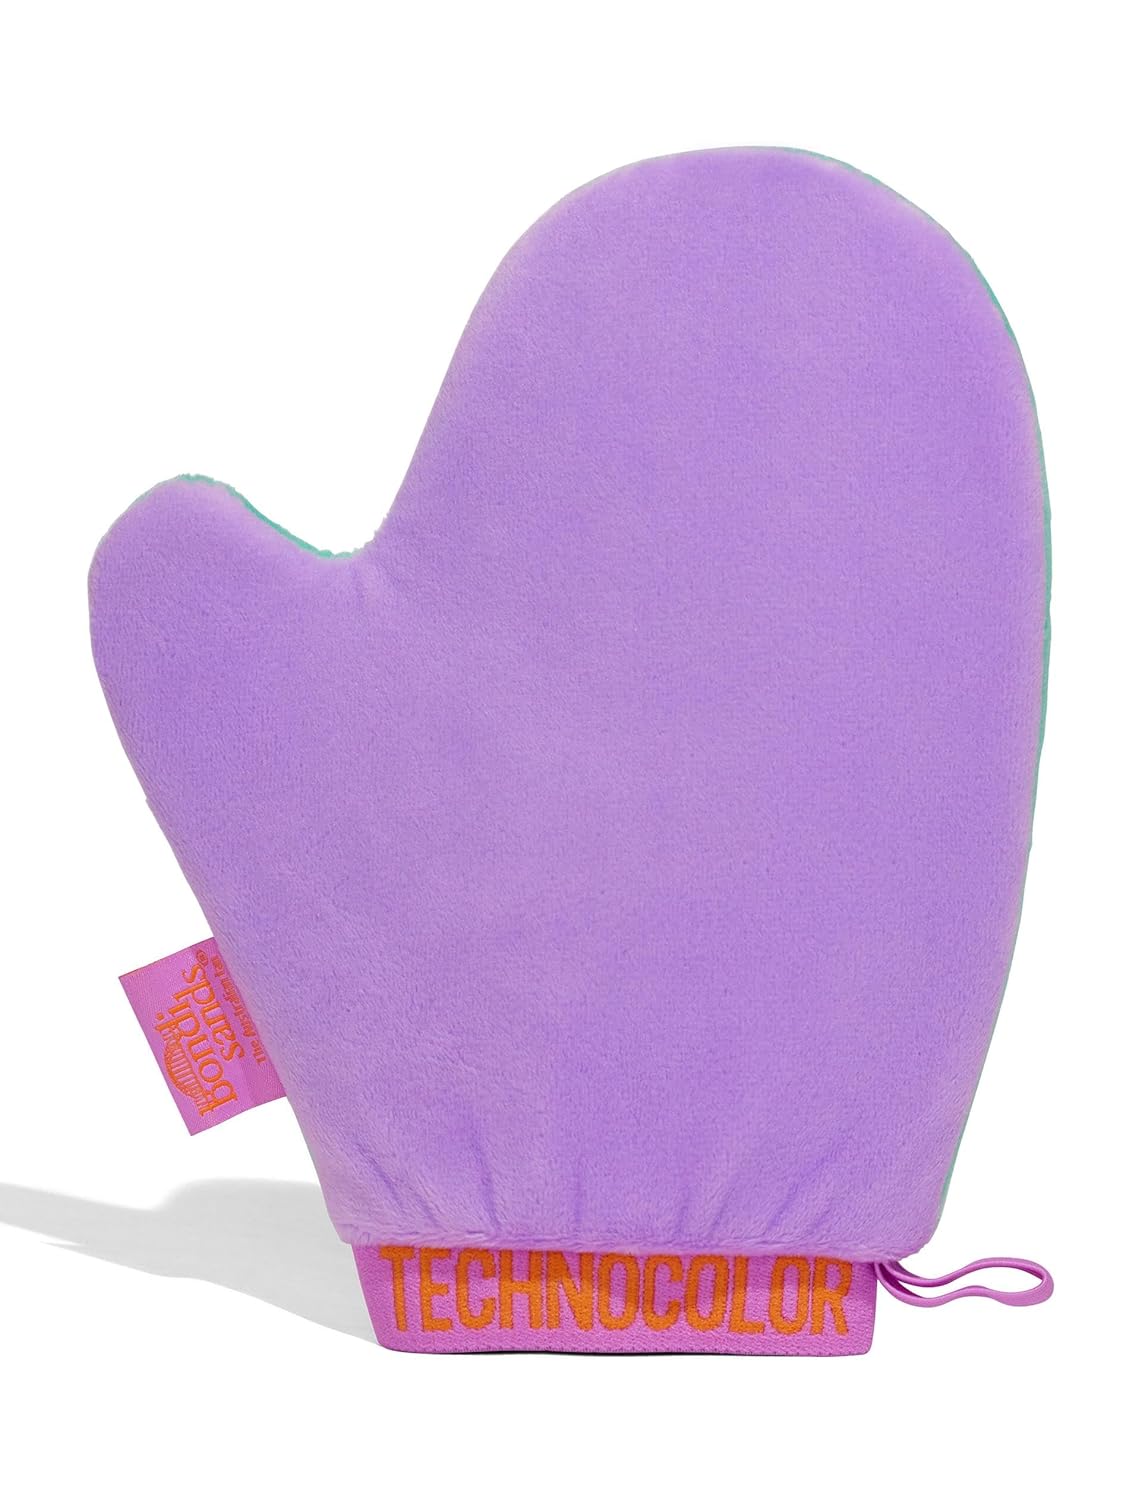 Bondi Sands Self-Tanning Mitt | Reusable Applicator Glove Evenly Applies Self-Tanner for a Natural, Bronzed, Streak-Free Appearance | Includes 1 Mitt